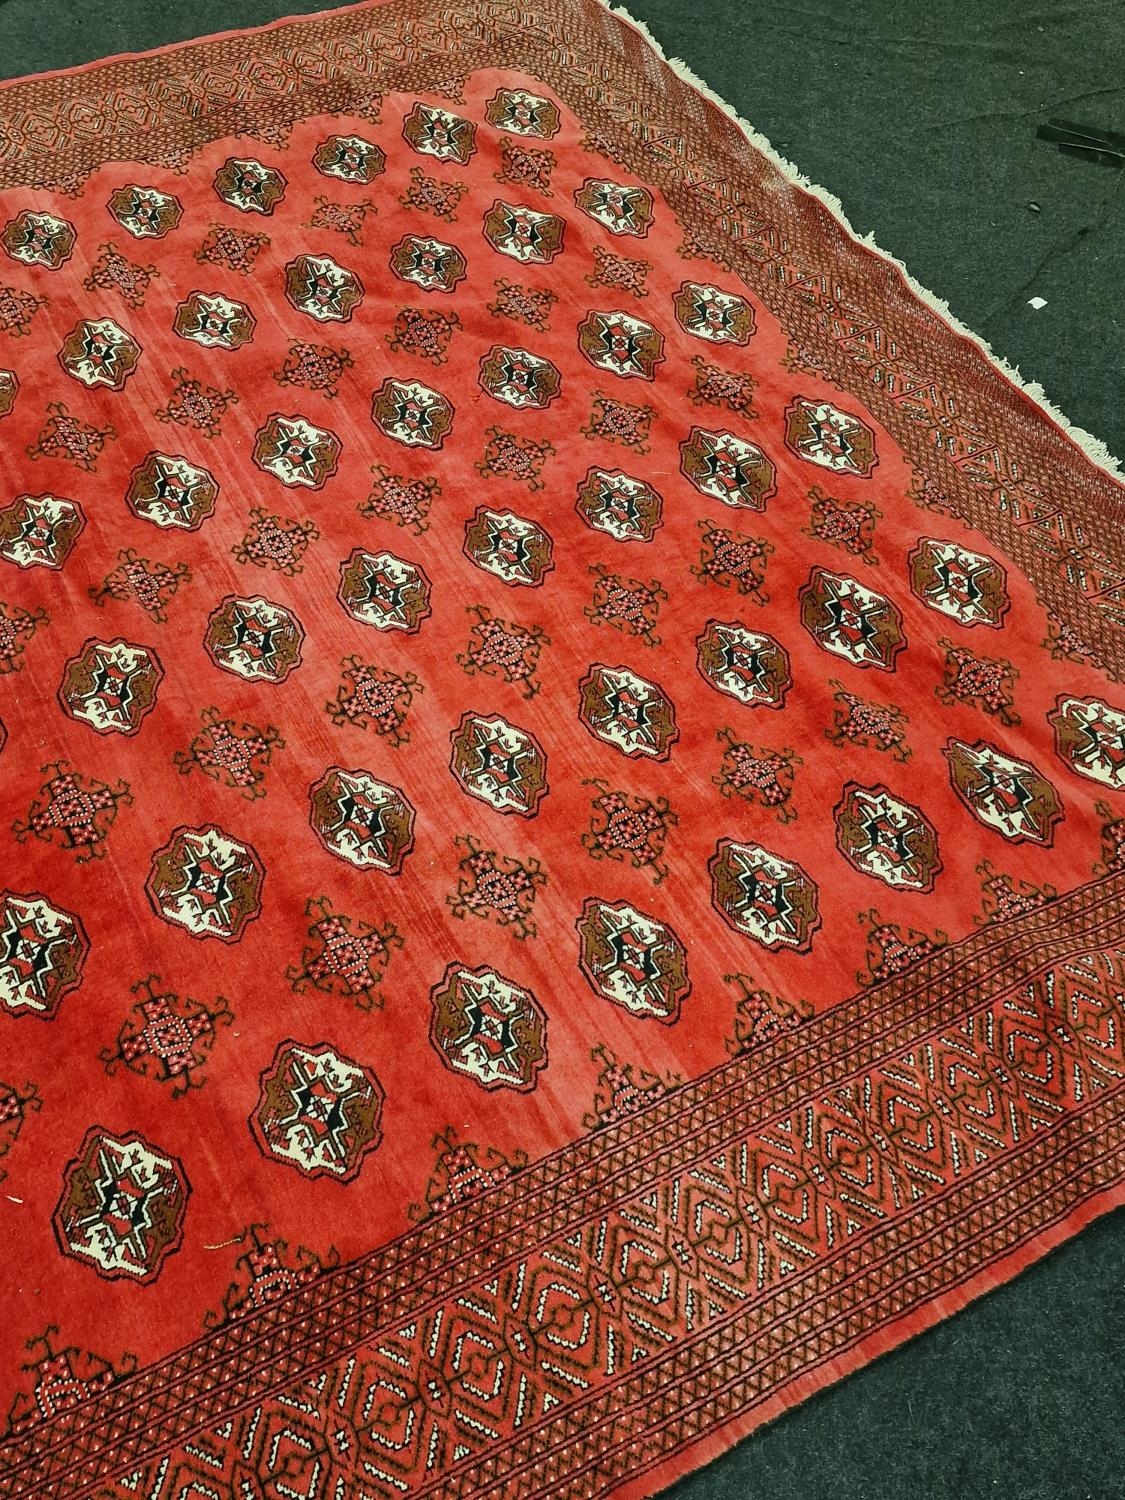 Large room size red patterned carpet 370x295cm. - Image 3 of 4